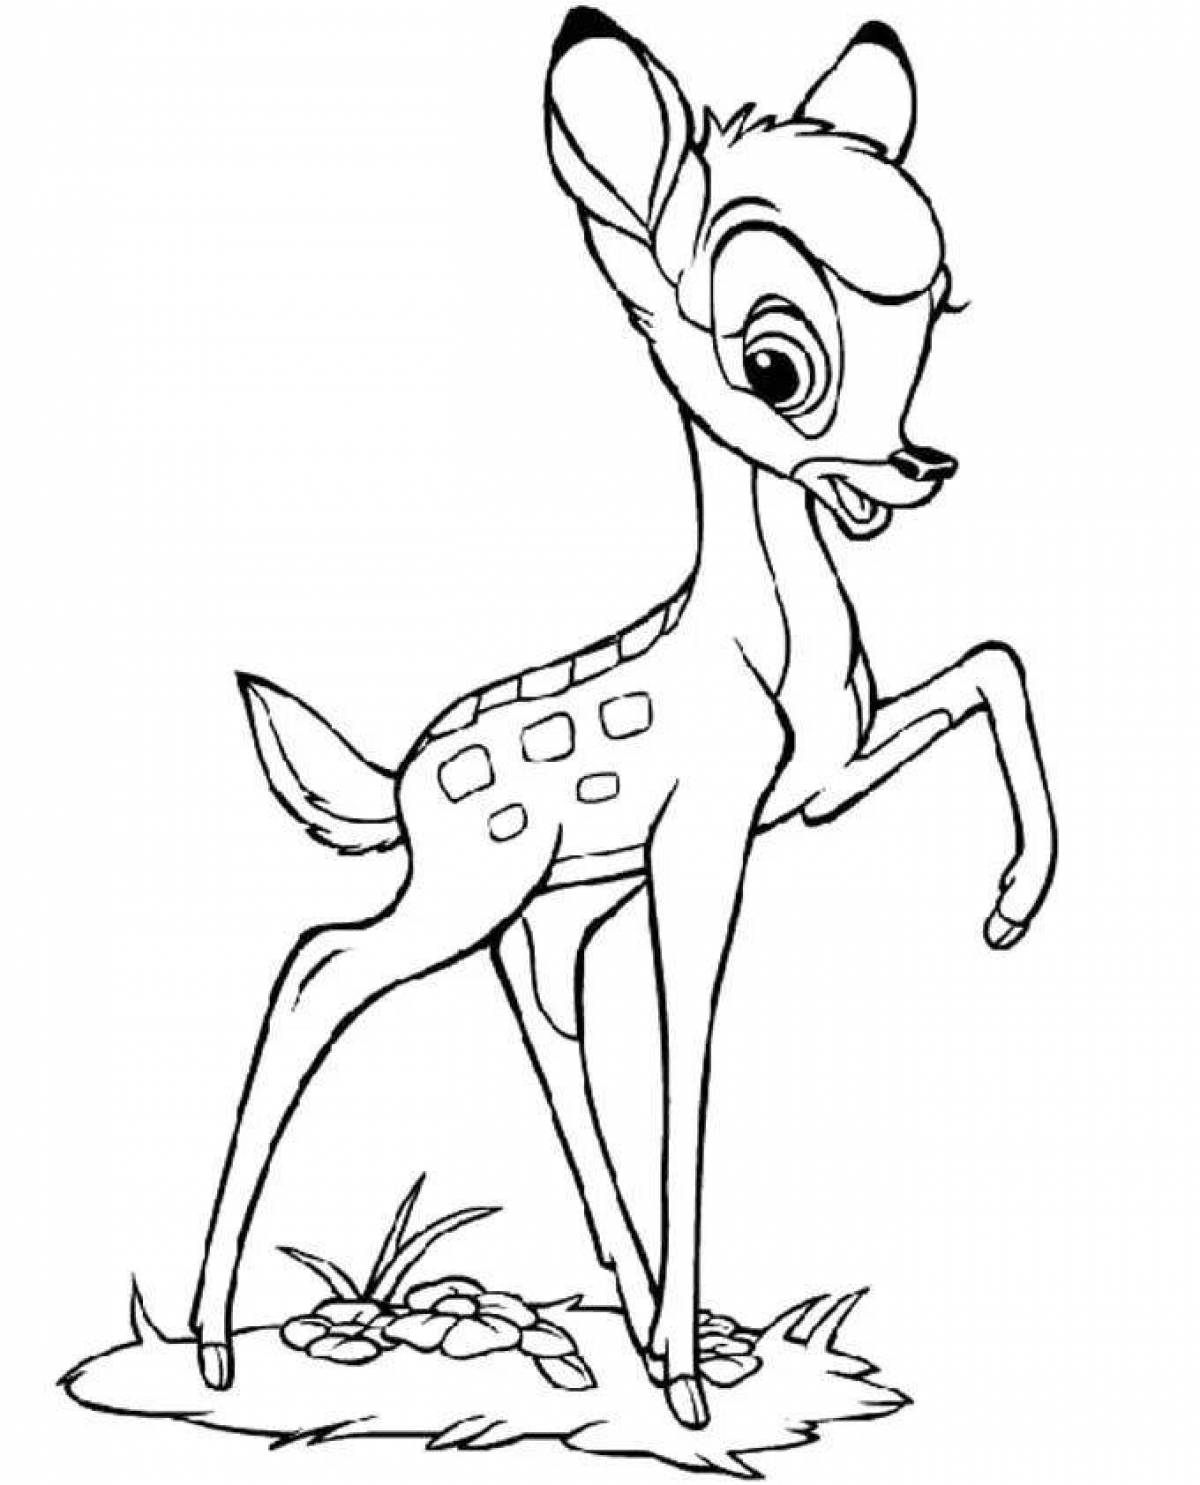 Coloring page joyful bambi faun